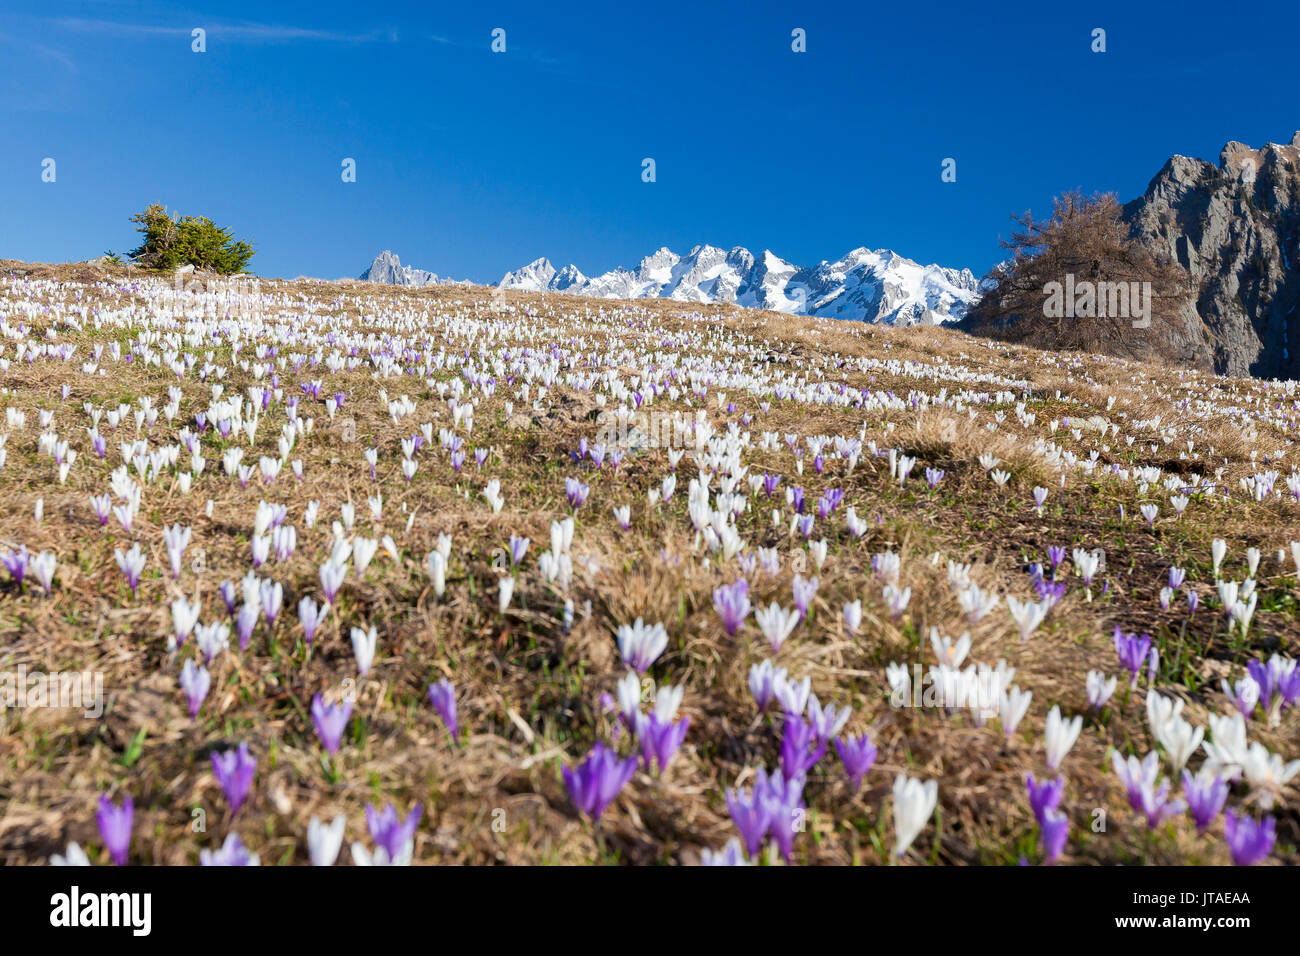 Colorful crocus in meadows framed by snowy peaks, Alpe Granda, Sondrio province, Masino Valley, Valtellina, Lombardy, Italy Stock Photo